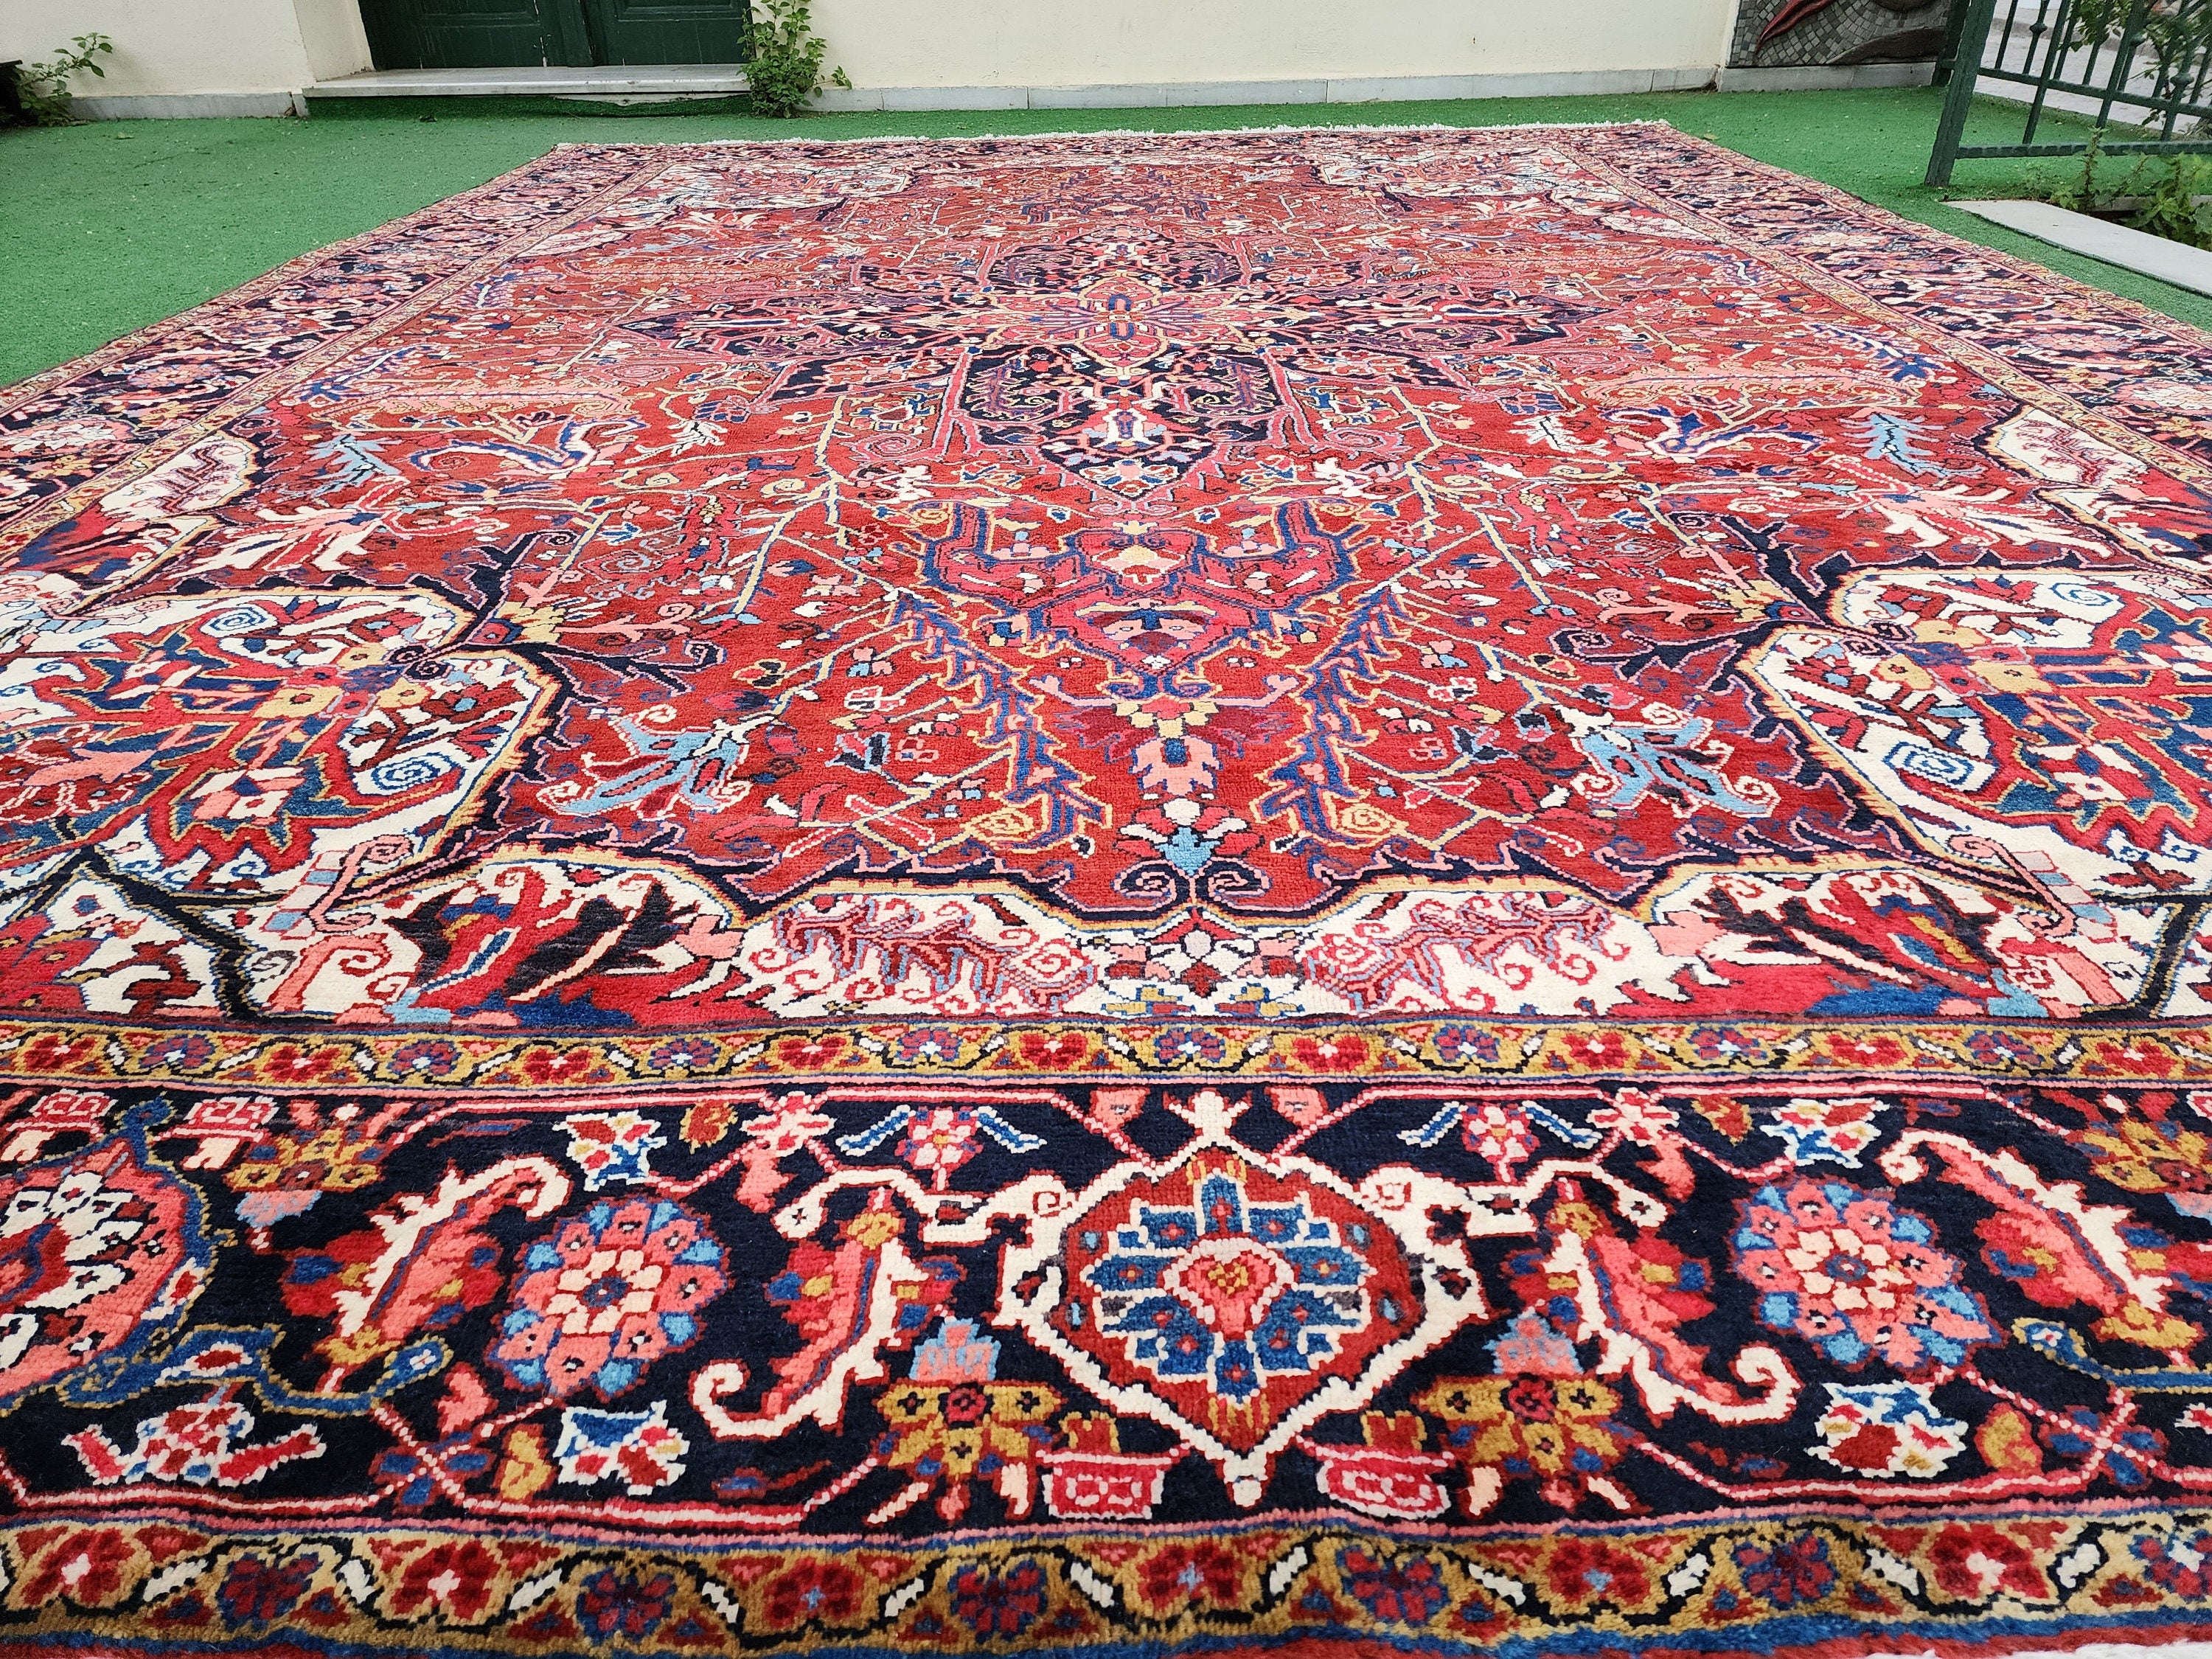 Red and Blue Persian Area Rug, 13 x 9 ft Vintage Turkish Tribal Organic Wool Rug, Recycled Oriental Design Rustic Floor Rug